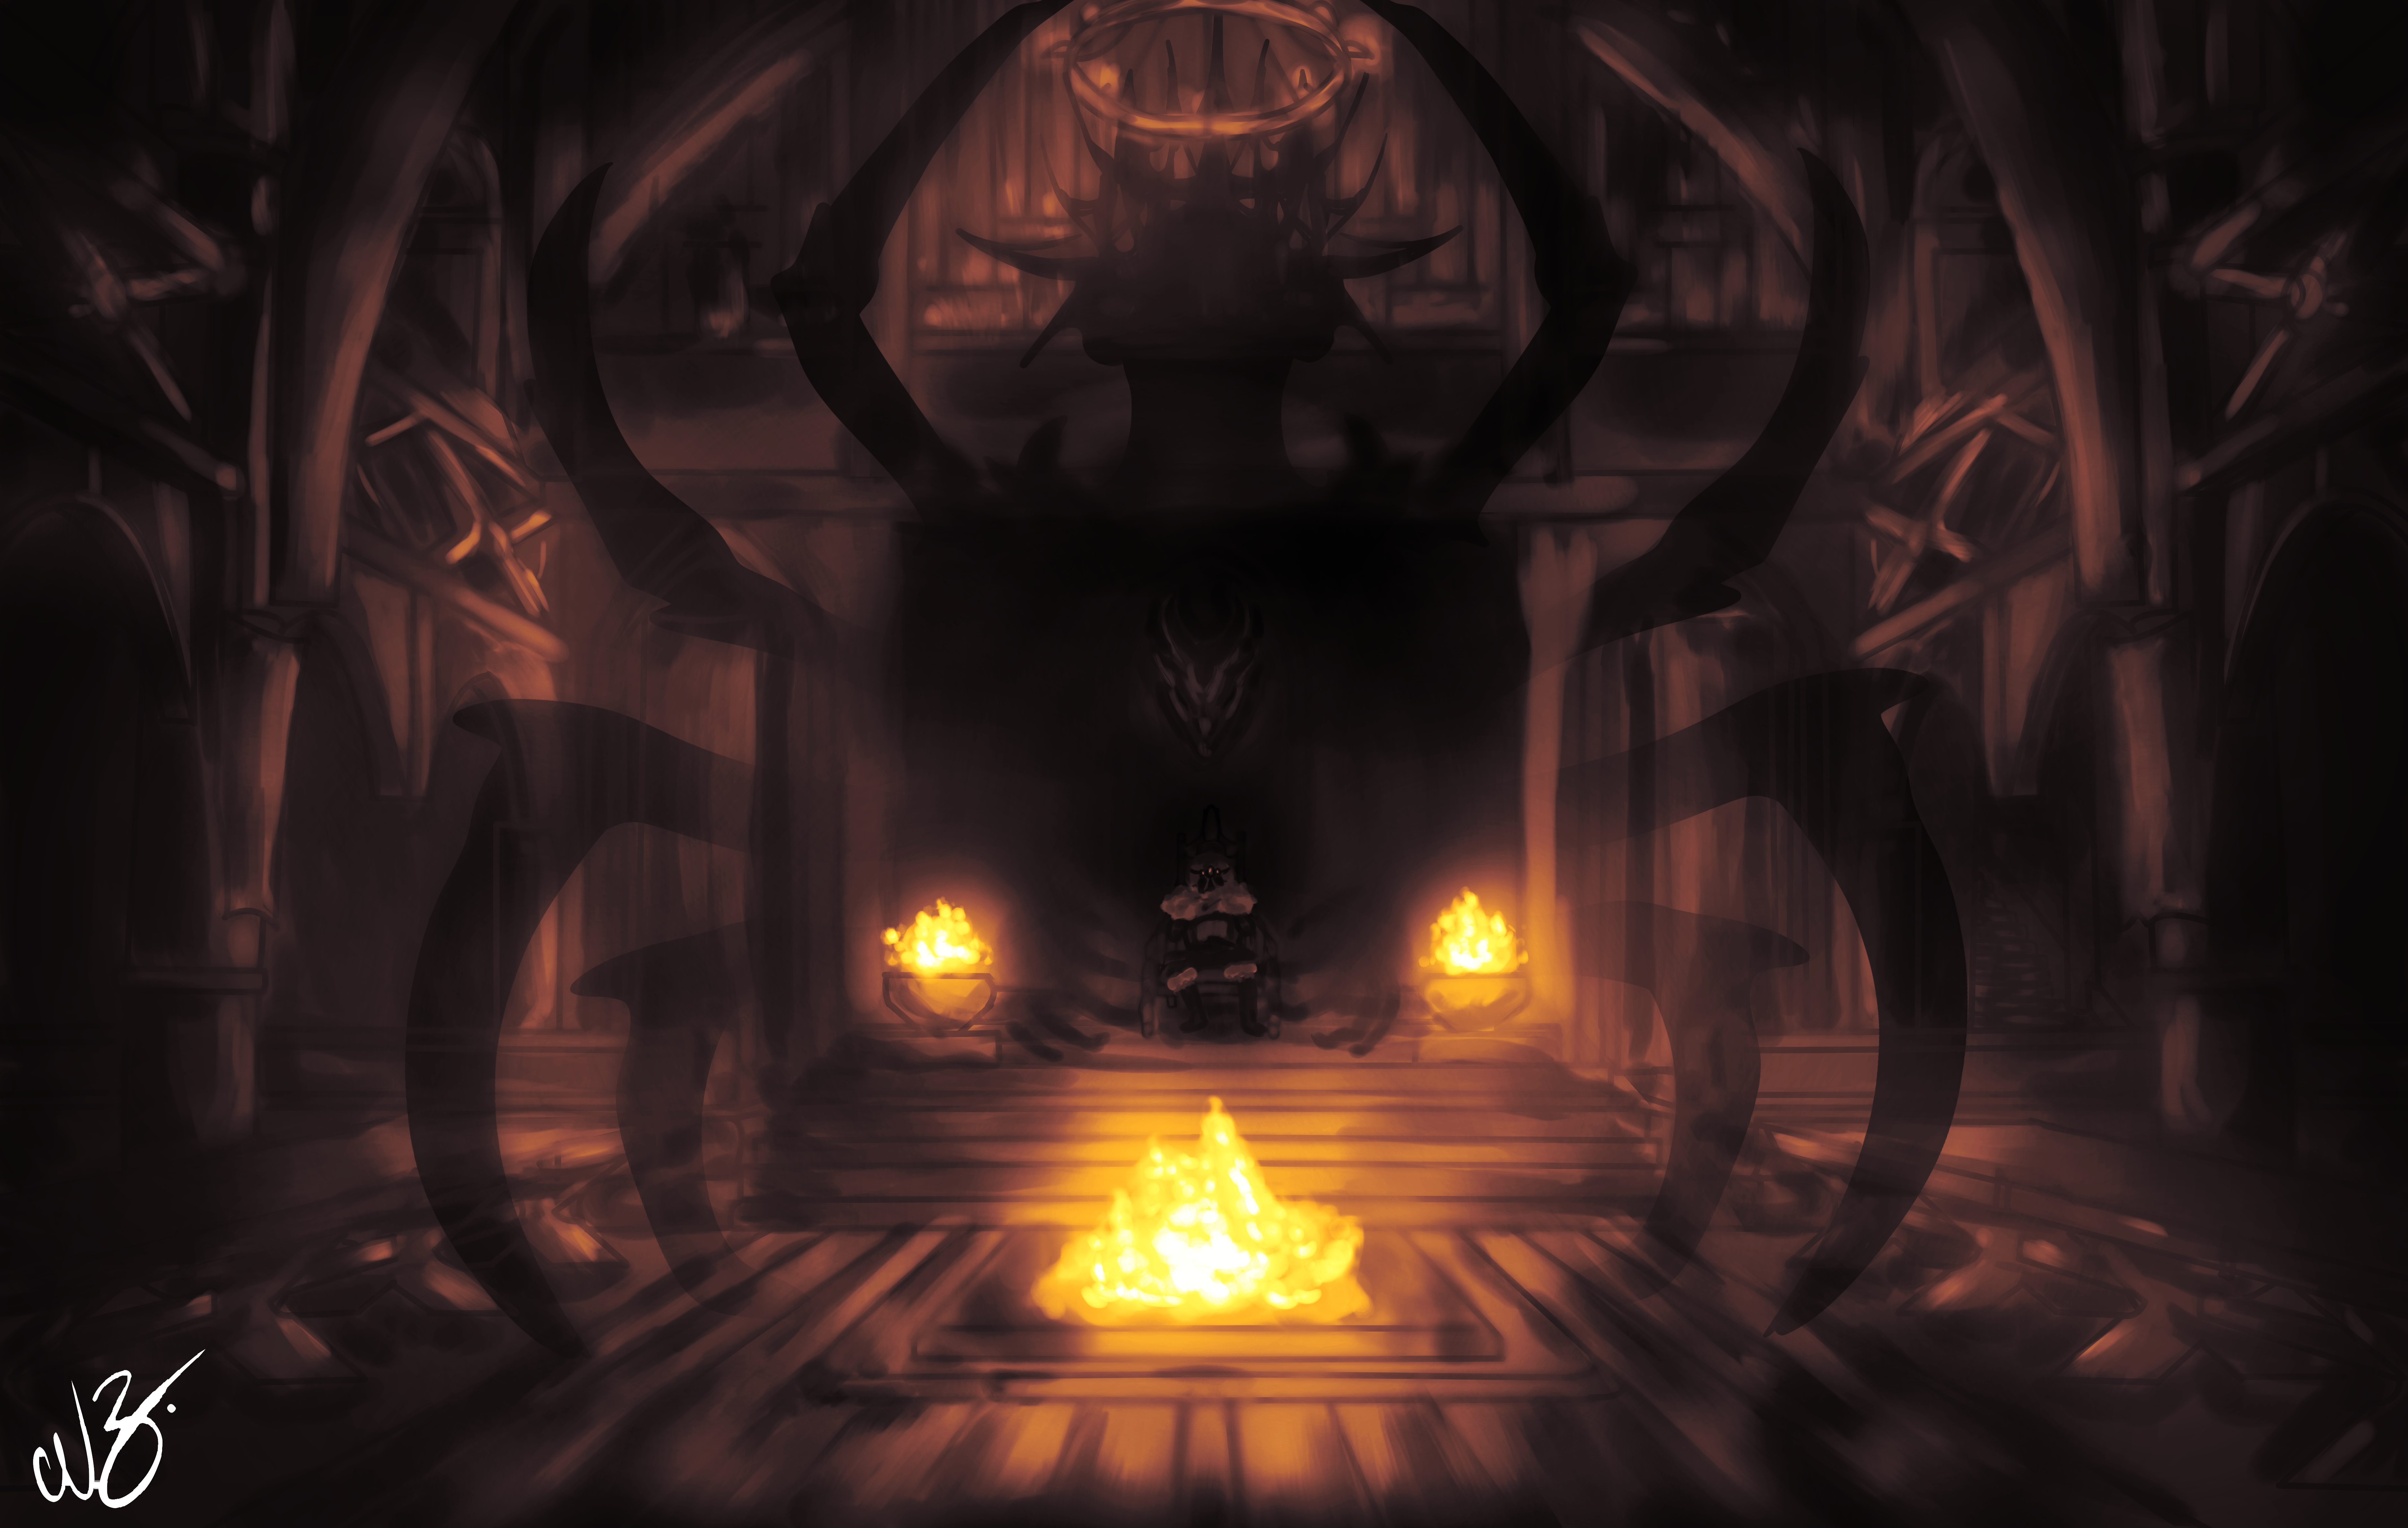 Quest Feature: The Whispering Door